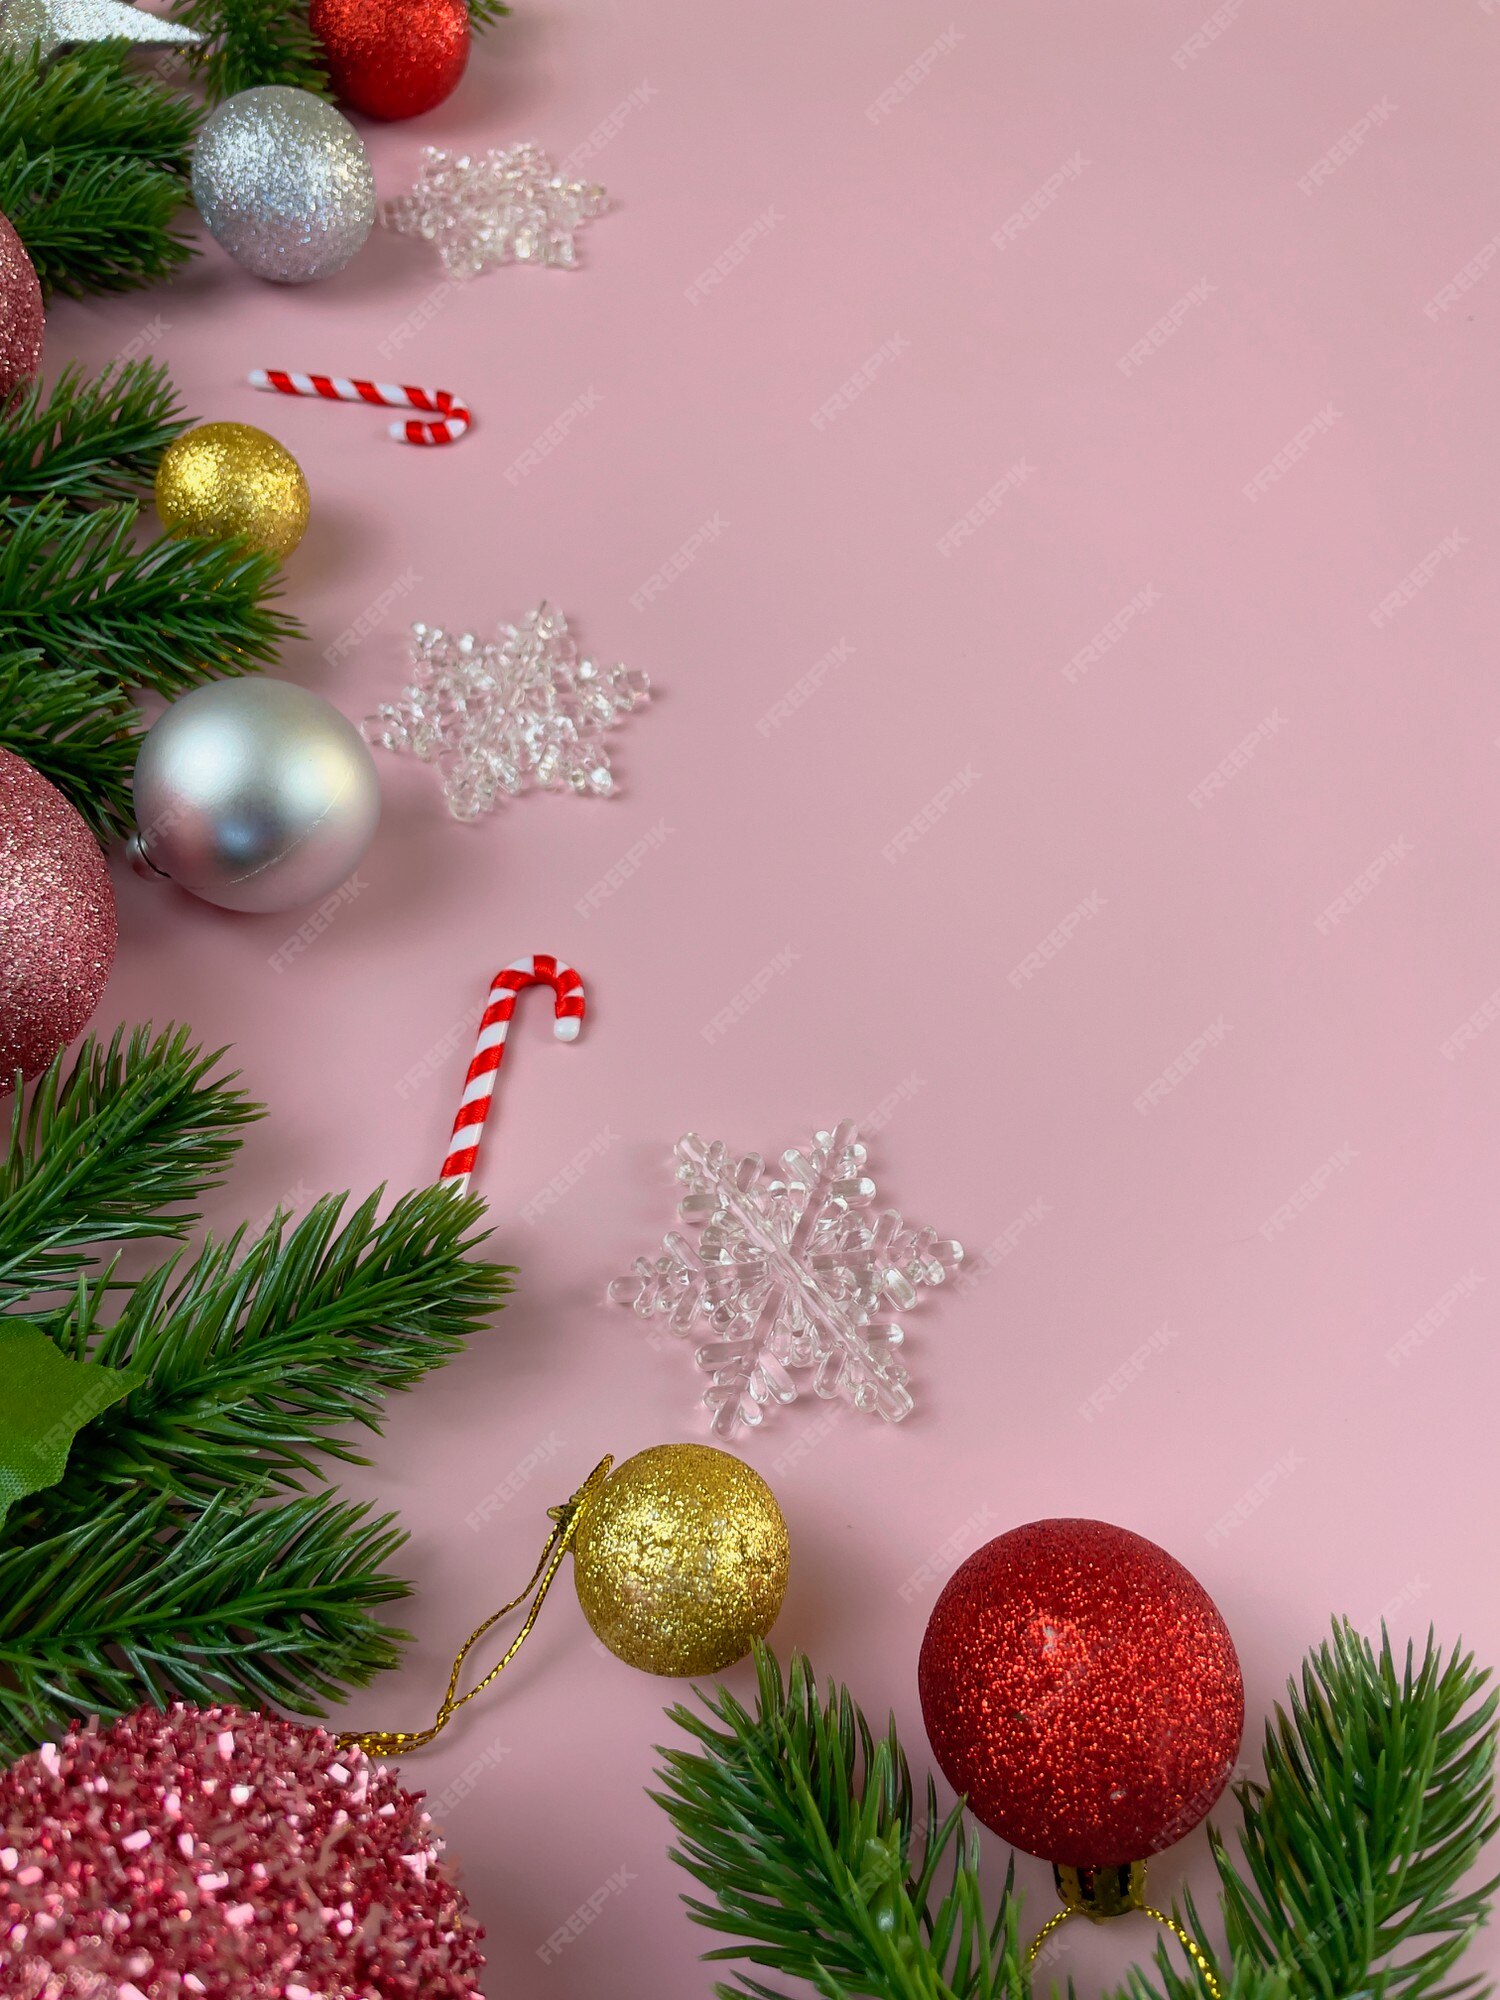 Premium Photo | Christmas decorations, pine tree leaves, golden balls ...